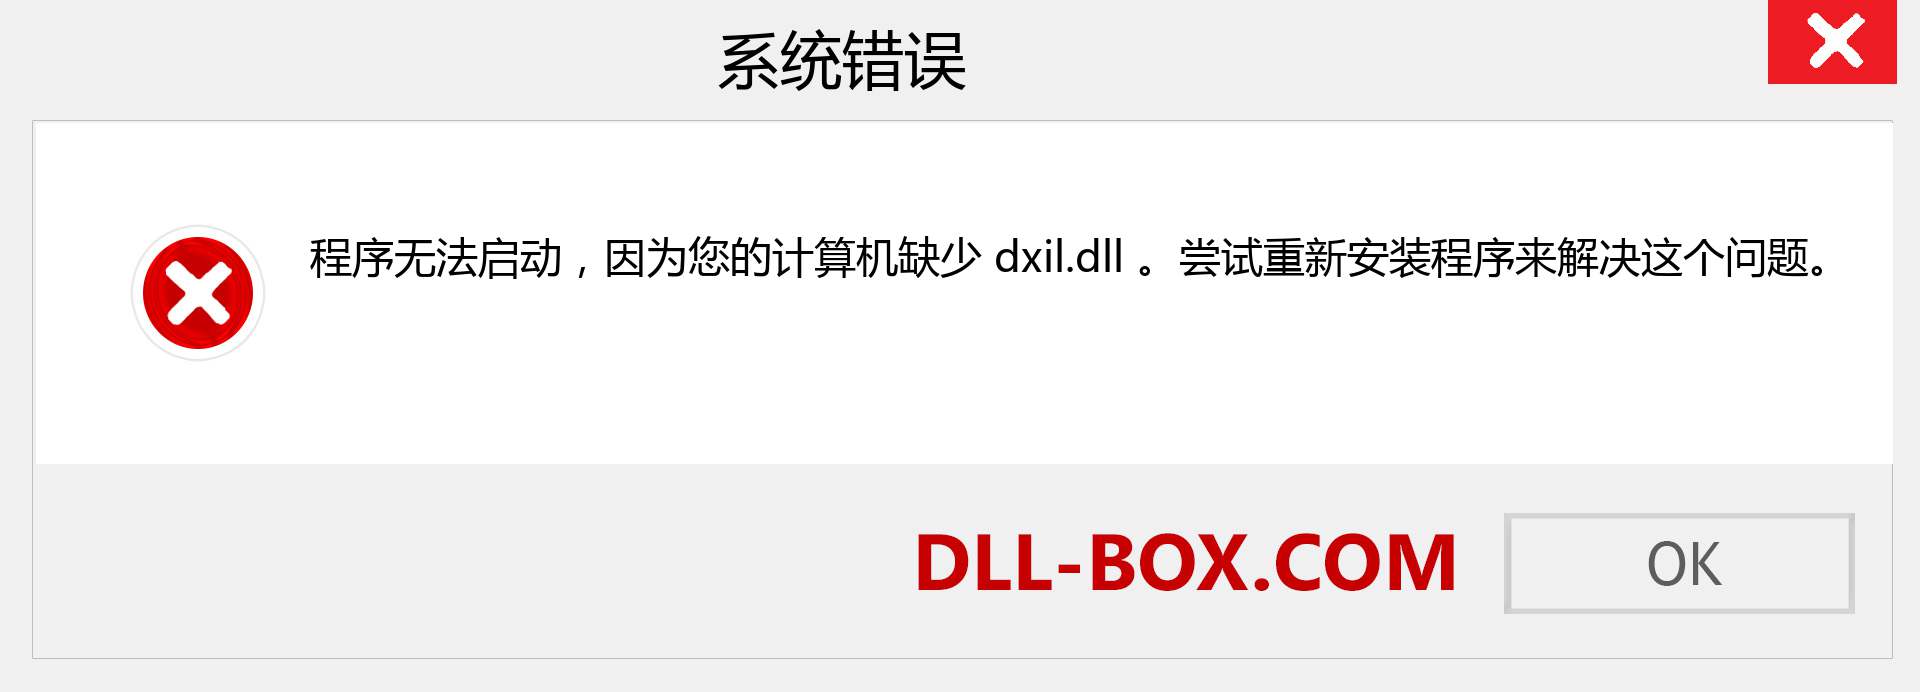 dxil.dll 文件丢失？。 适用于 Windows 7、8、10 的下载 - 修复 Windows、照片、图像上的 dxil dll 丢失错误